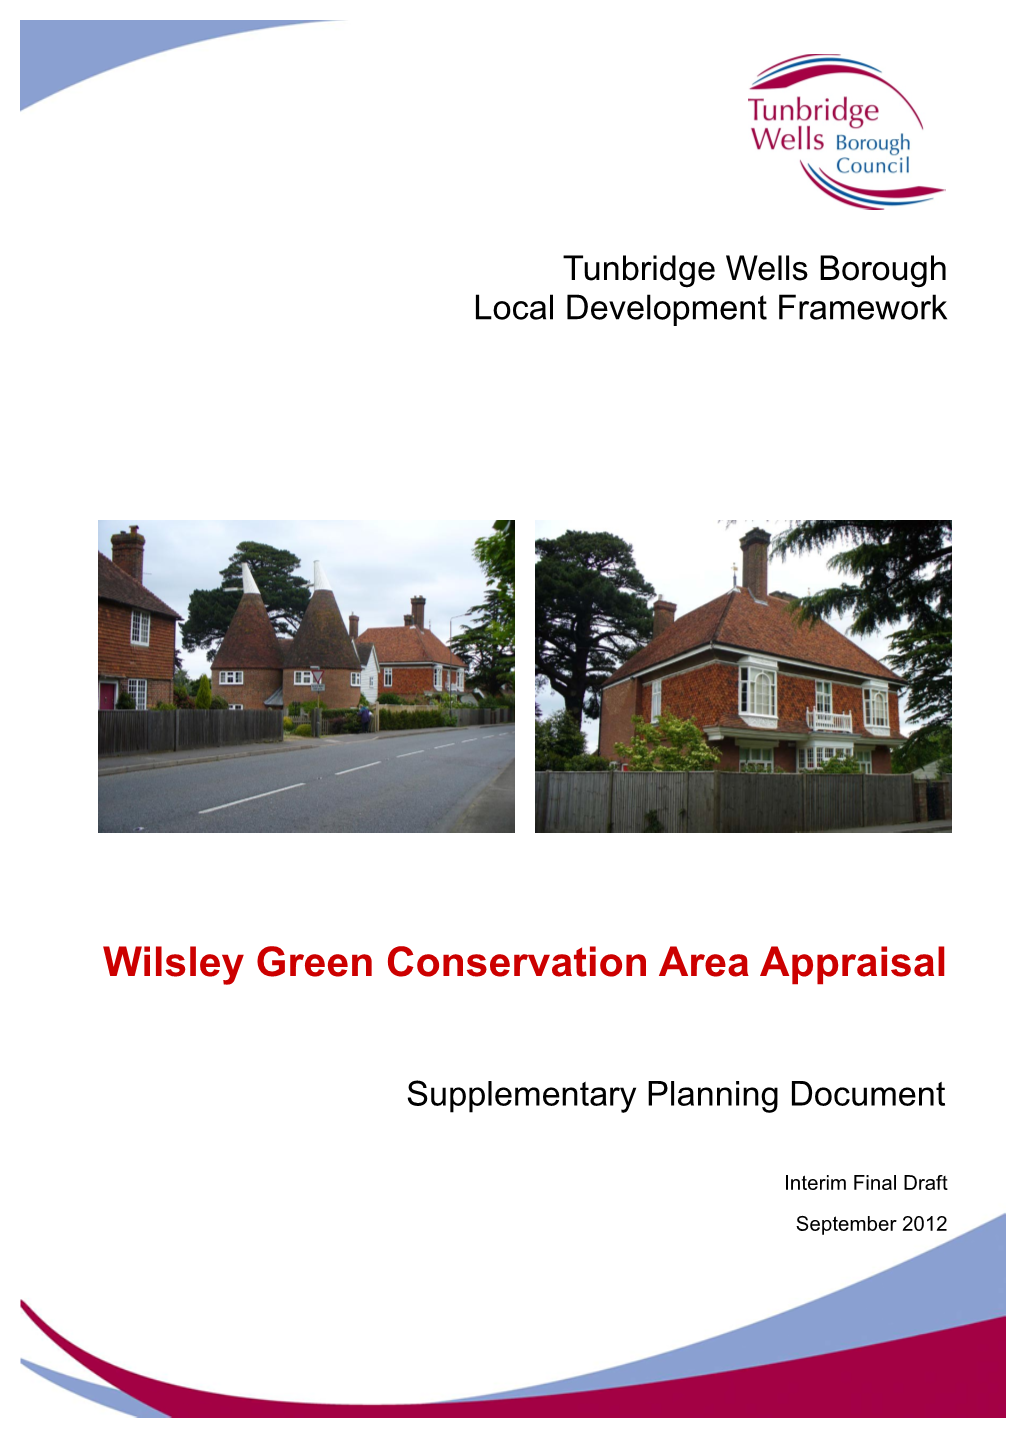 Wilsley Green Conservation Area Appraisal